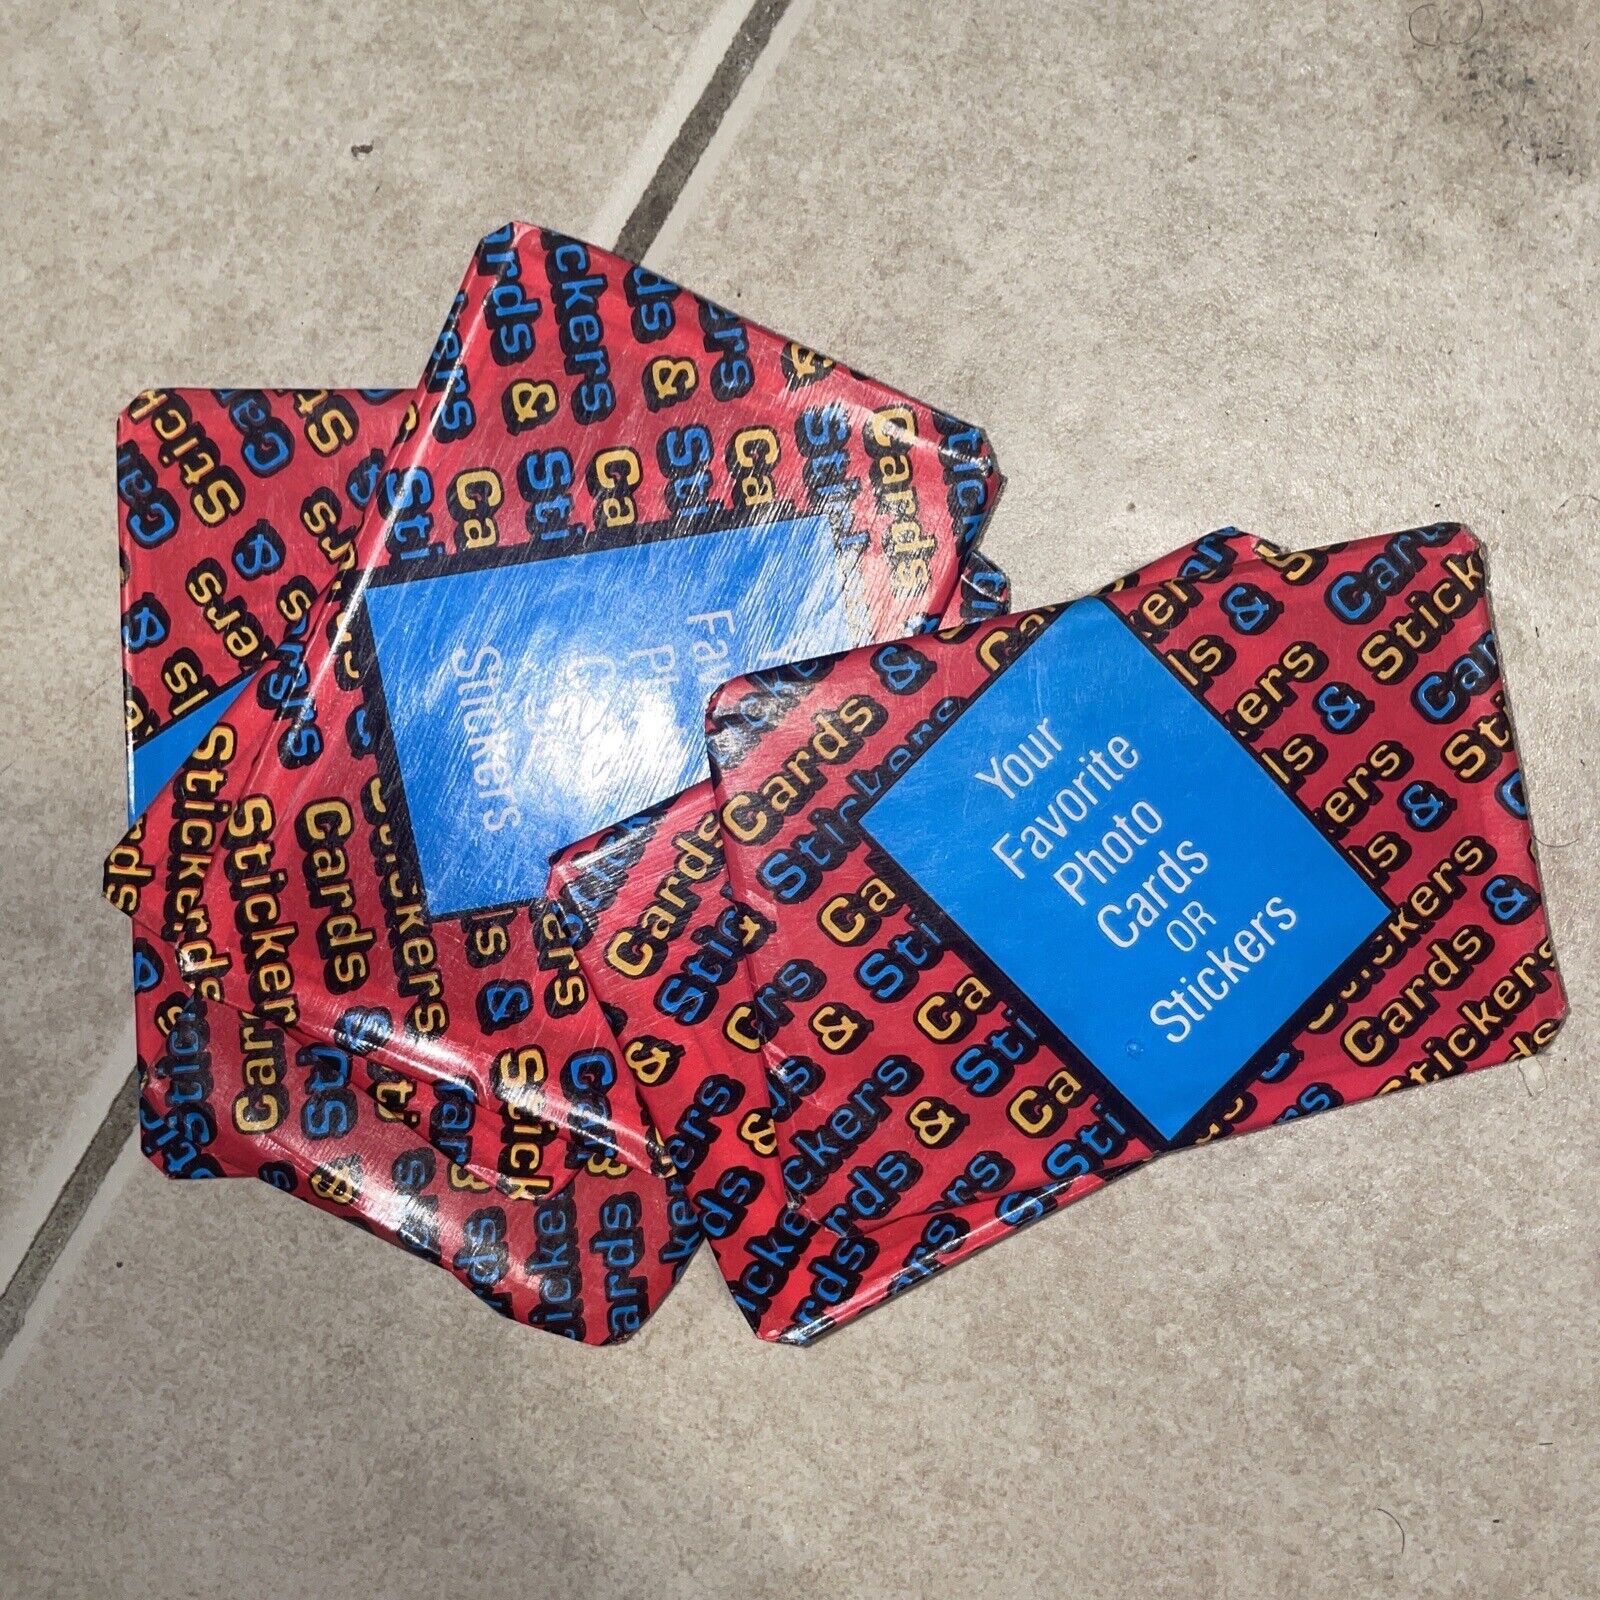 1981-Donruss -(6)-Sealed Fun Bag Packs Cards(No Gum or Stickers)